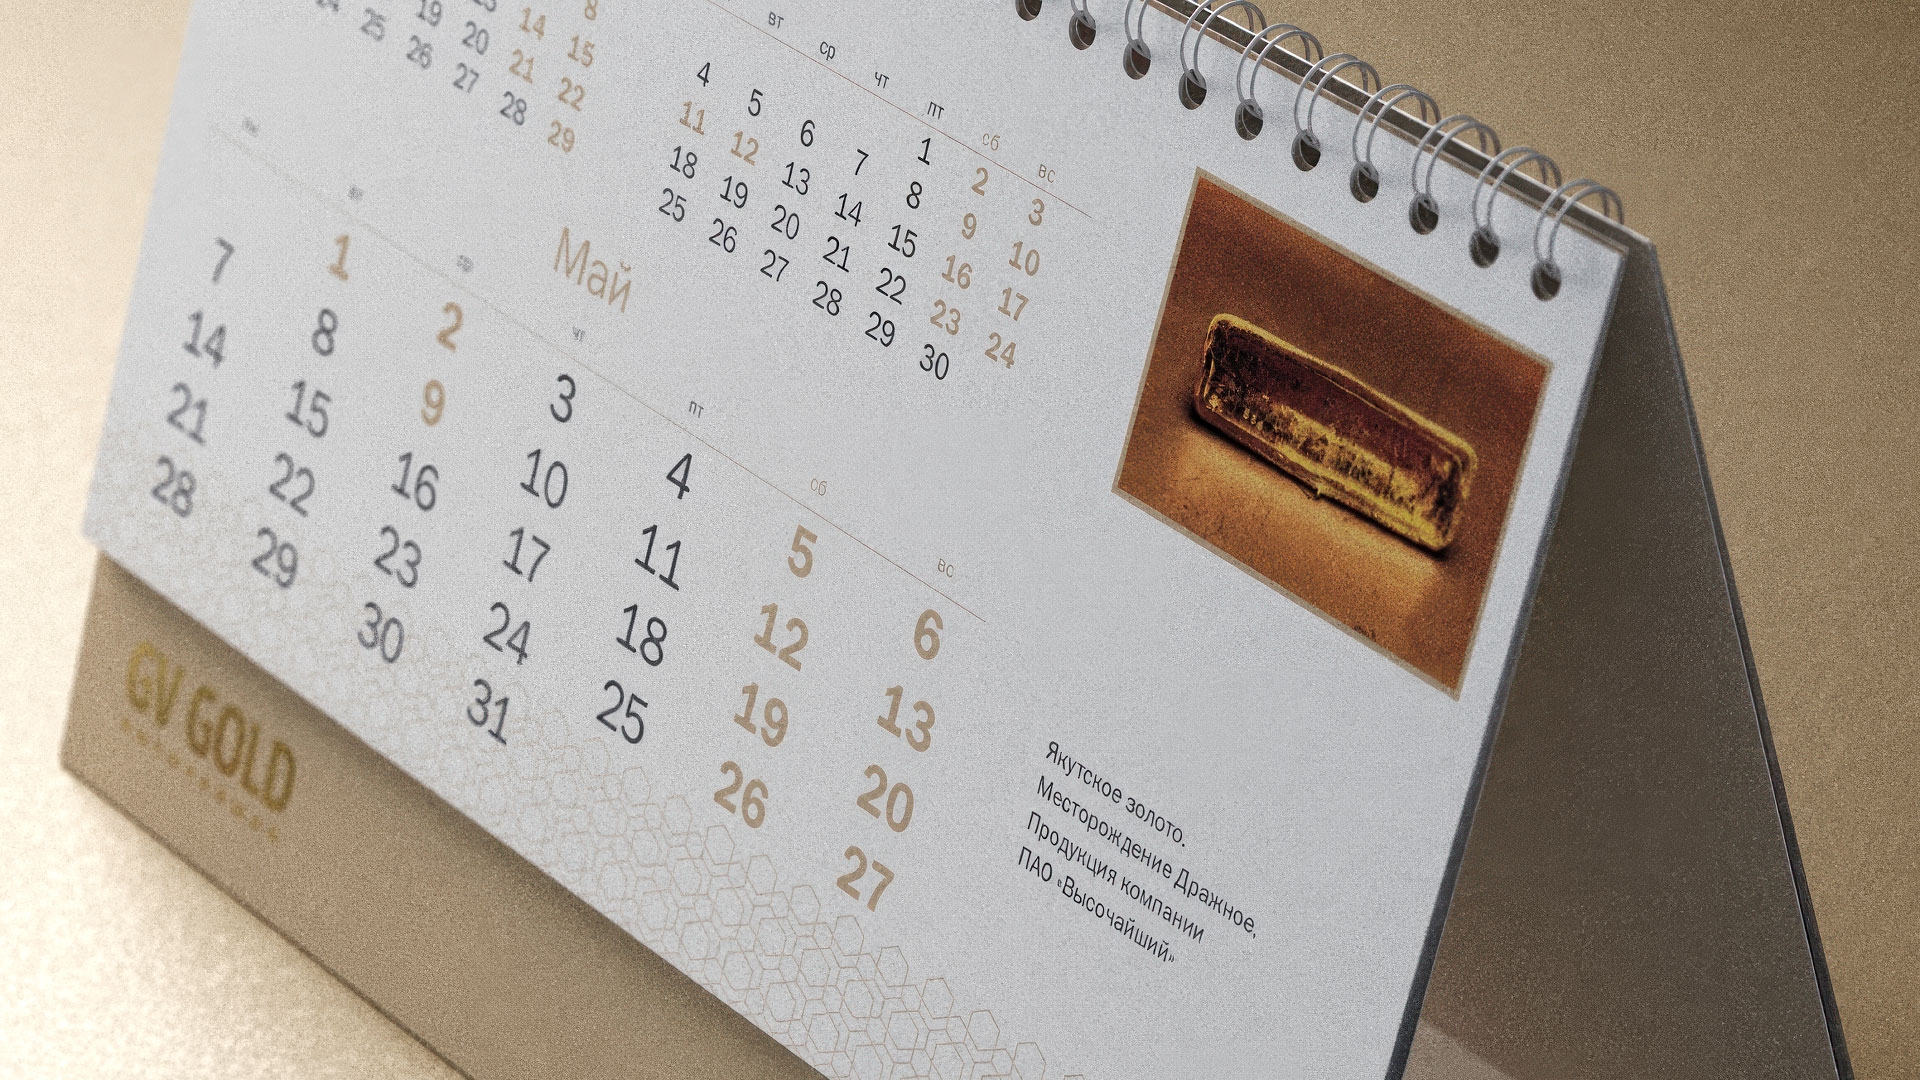 GV Gold - Календарь на 2018 год